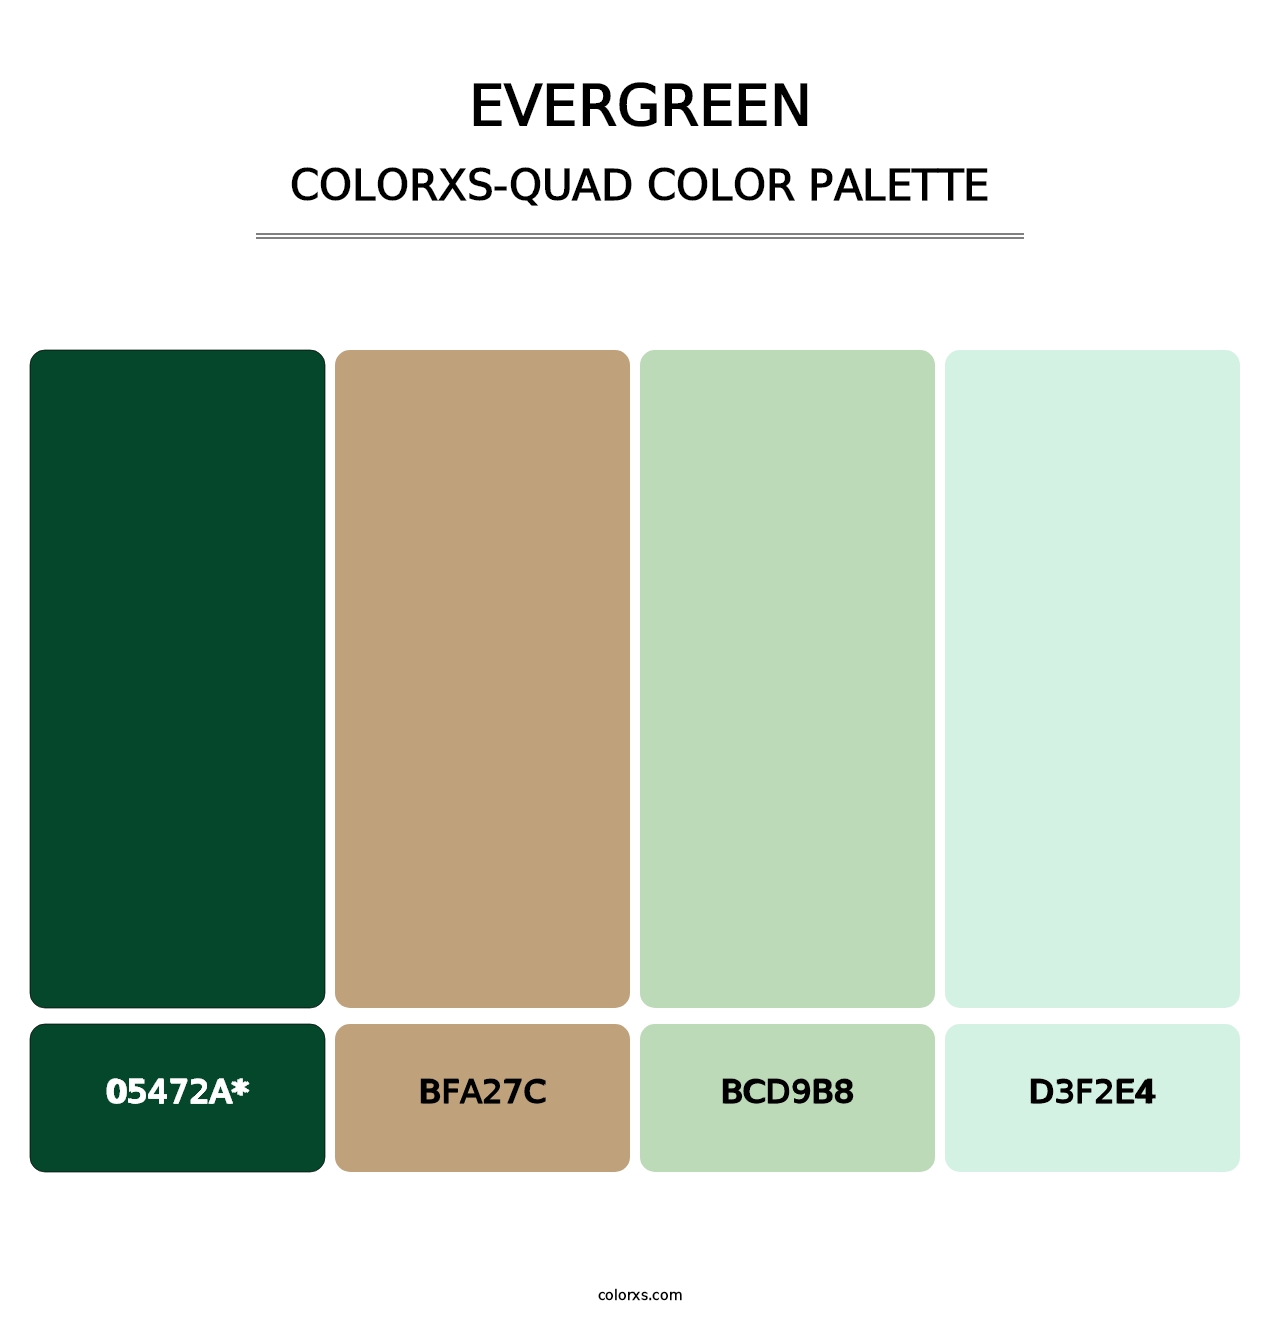 Evergreen - Colorxs Quad Palette